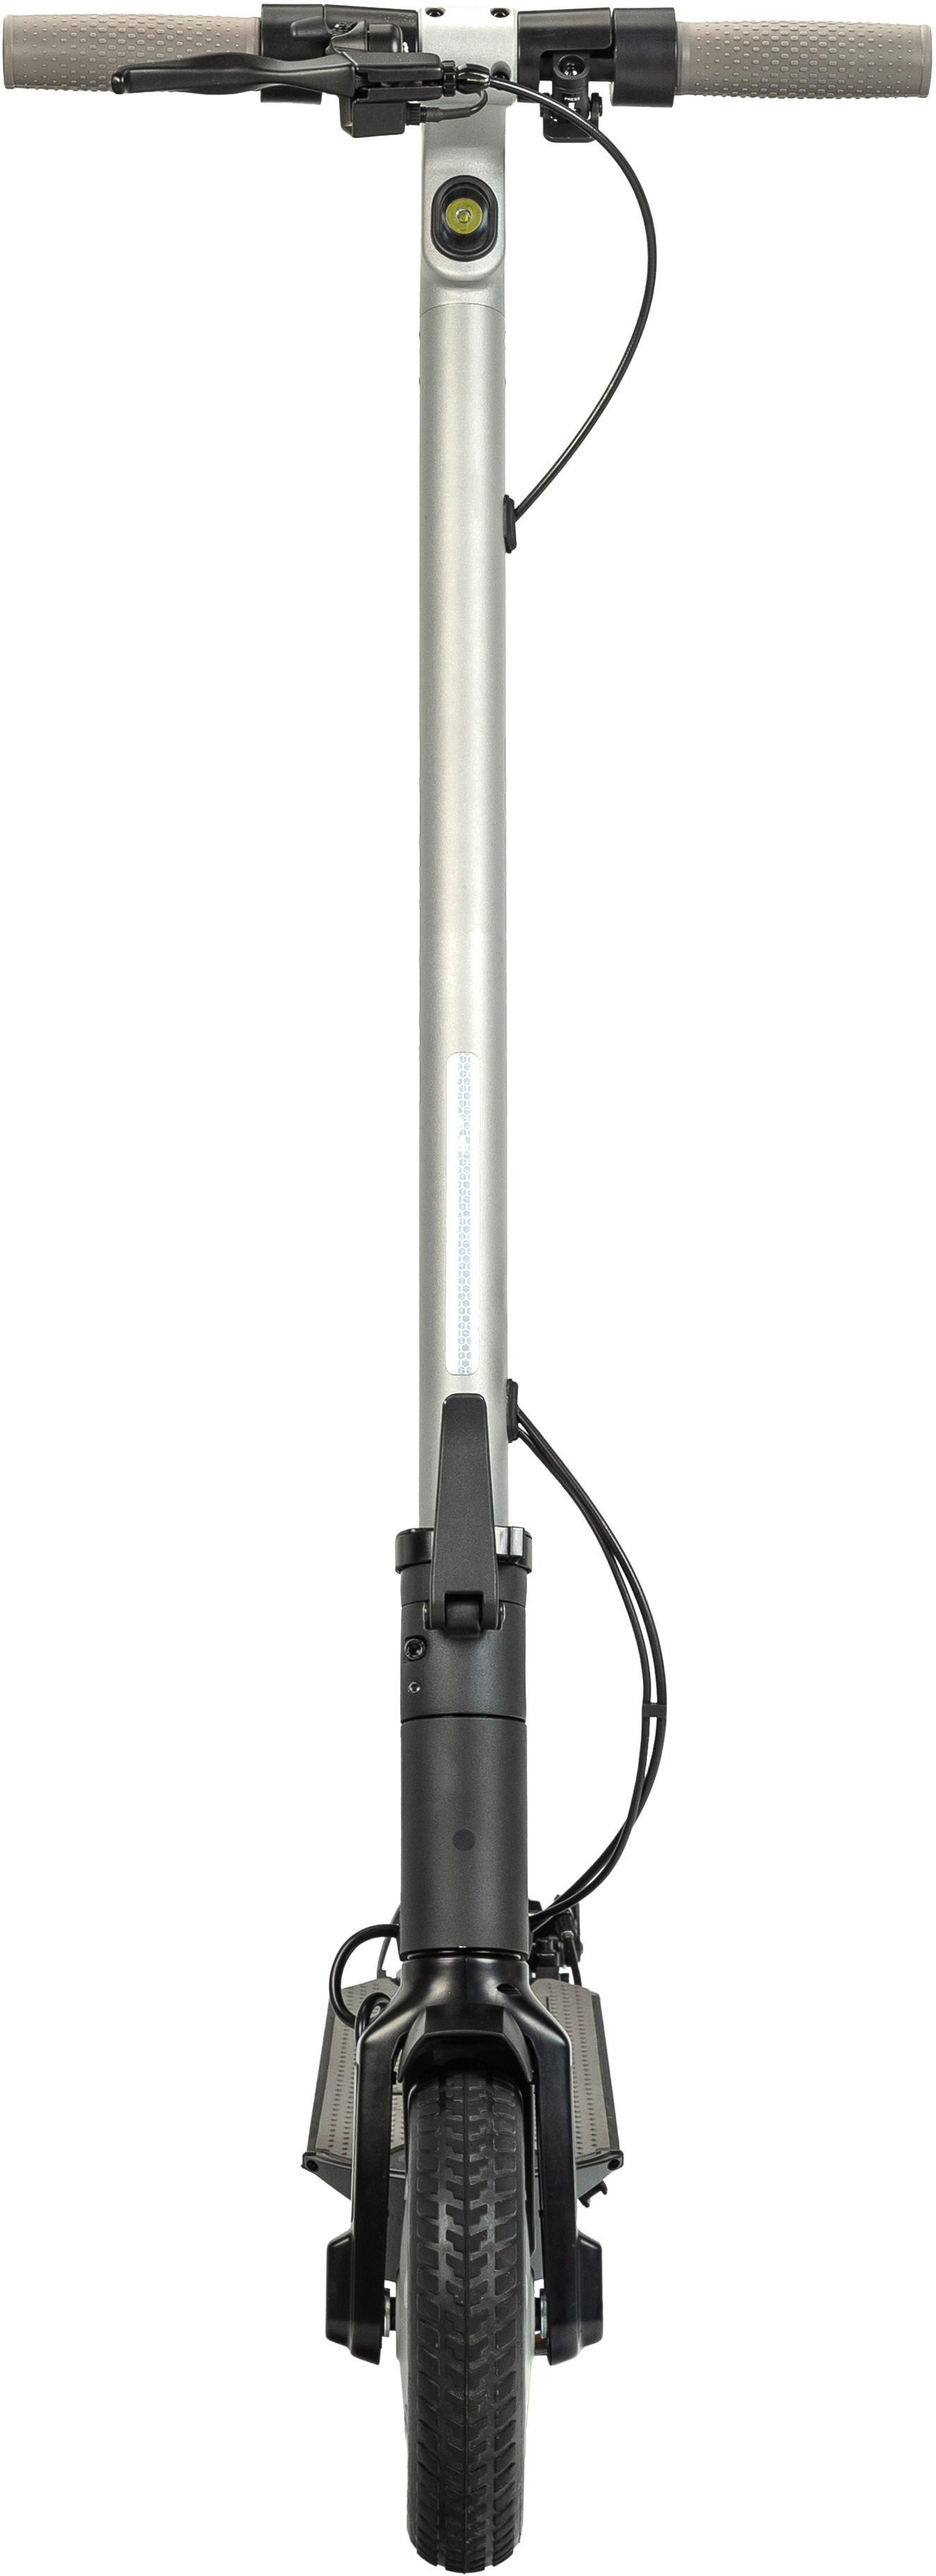 E-Scooter Klappbar inkl. Digitaler Tachoanzeige - Schwarz/Grau, Basics, Kunststoff/Metall (116/43/114,5cm) - Grundig